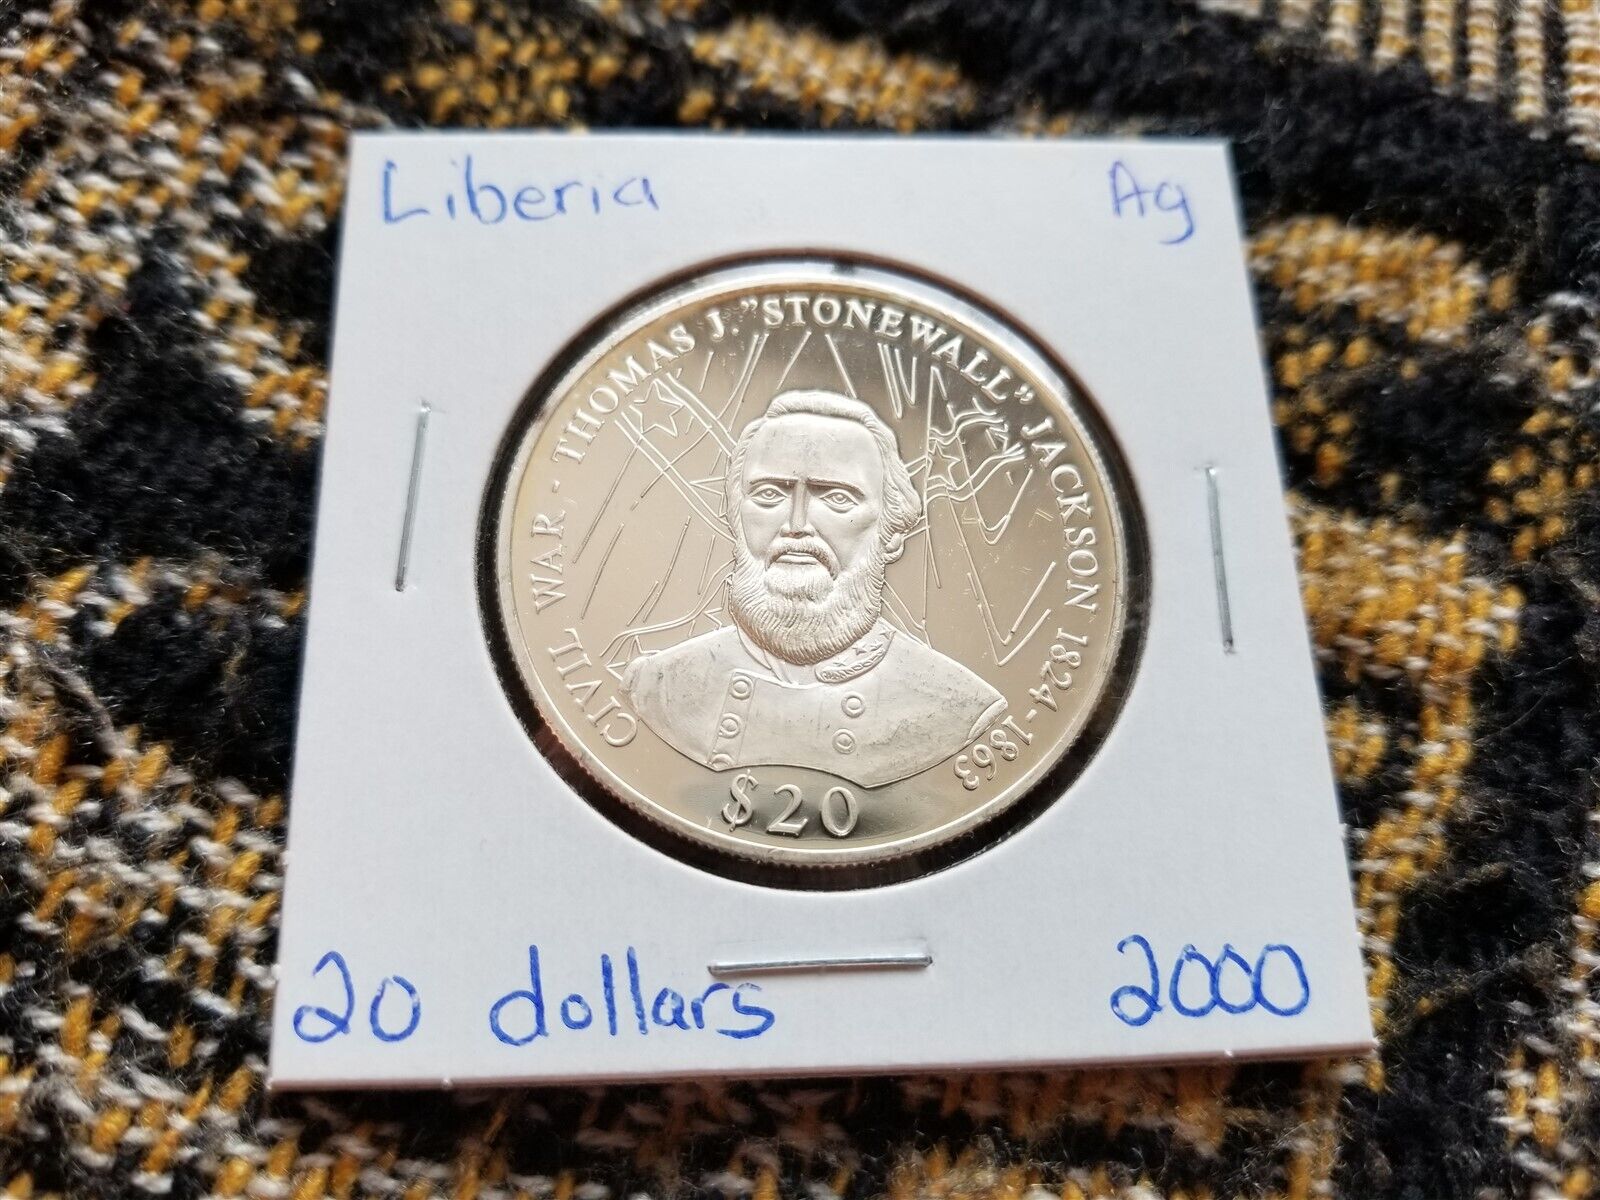 Liberia 20 Dollars 2000 Silver Proof - Thomas Stonewall Jackson - Civil War